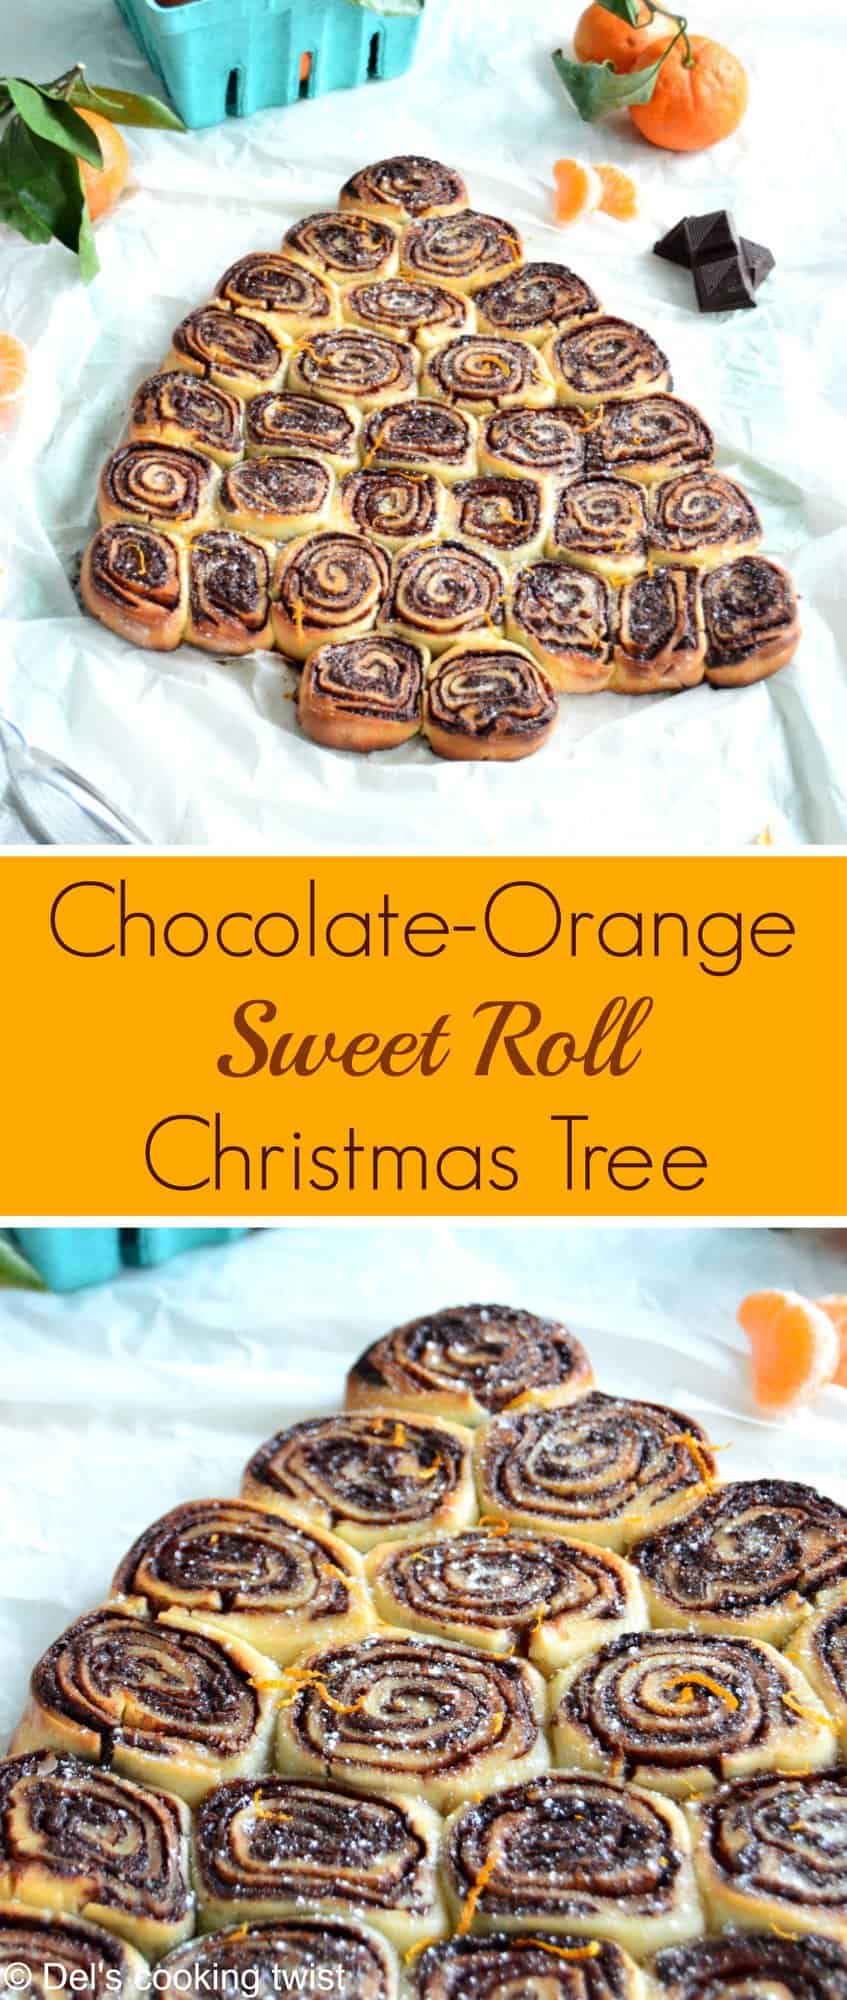 Chocolate-Orange Sweet Roll Christmas Tree | Del's cooking twist